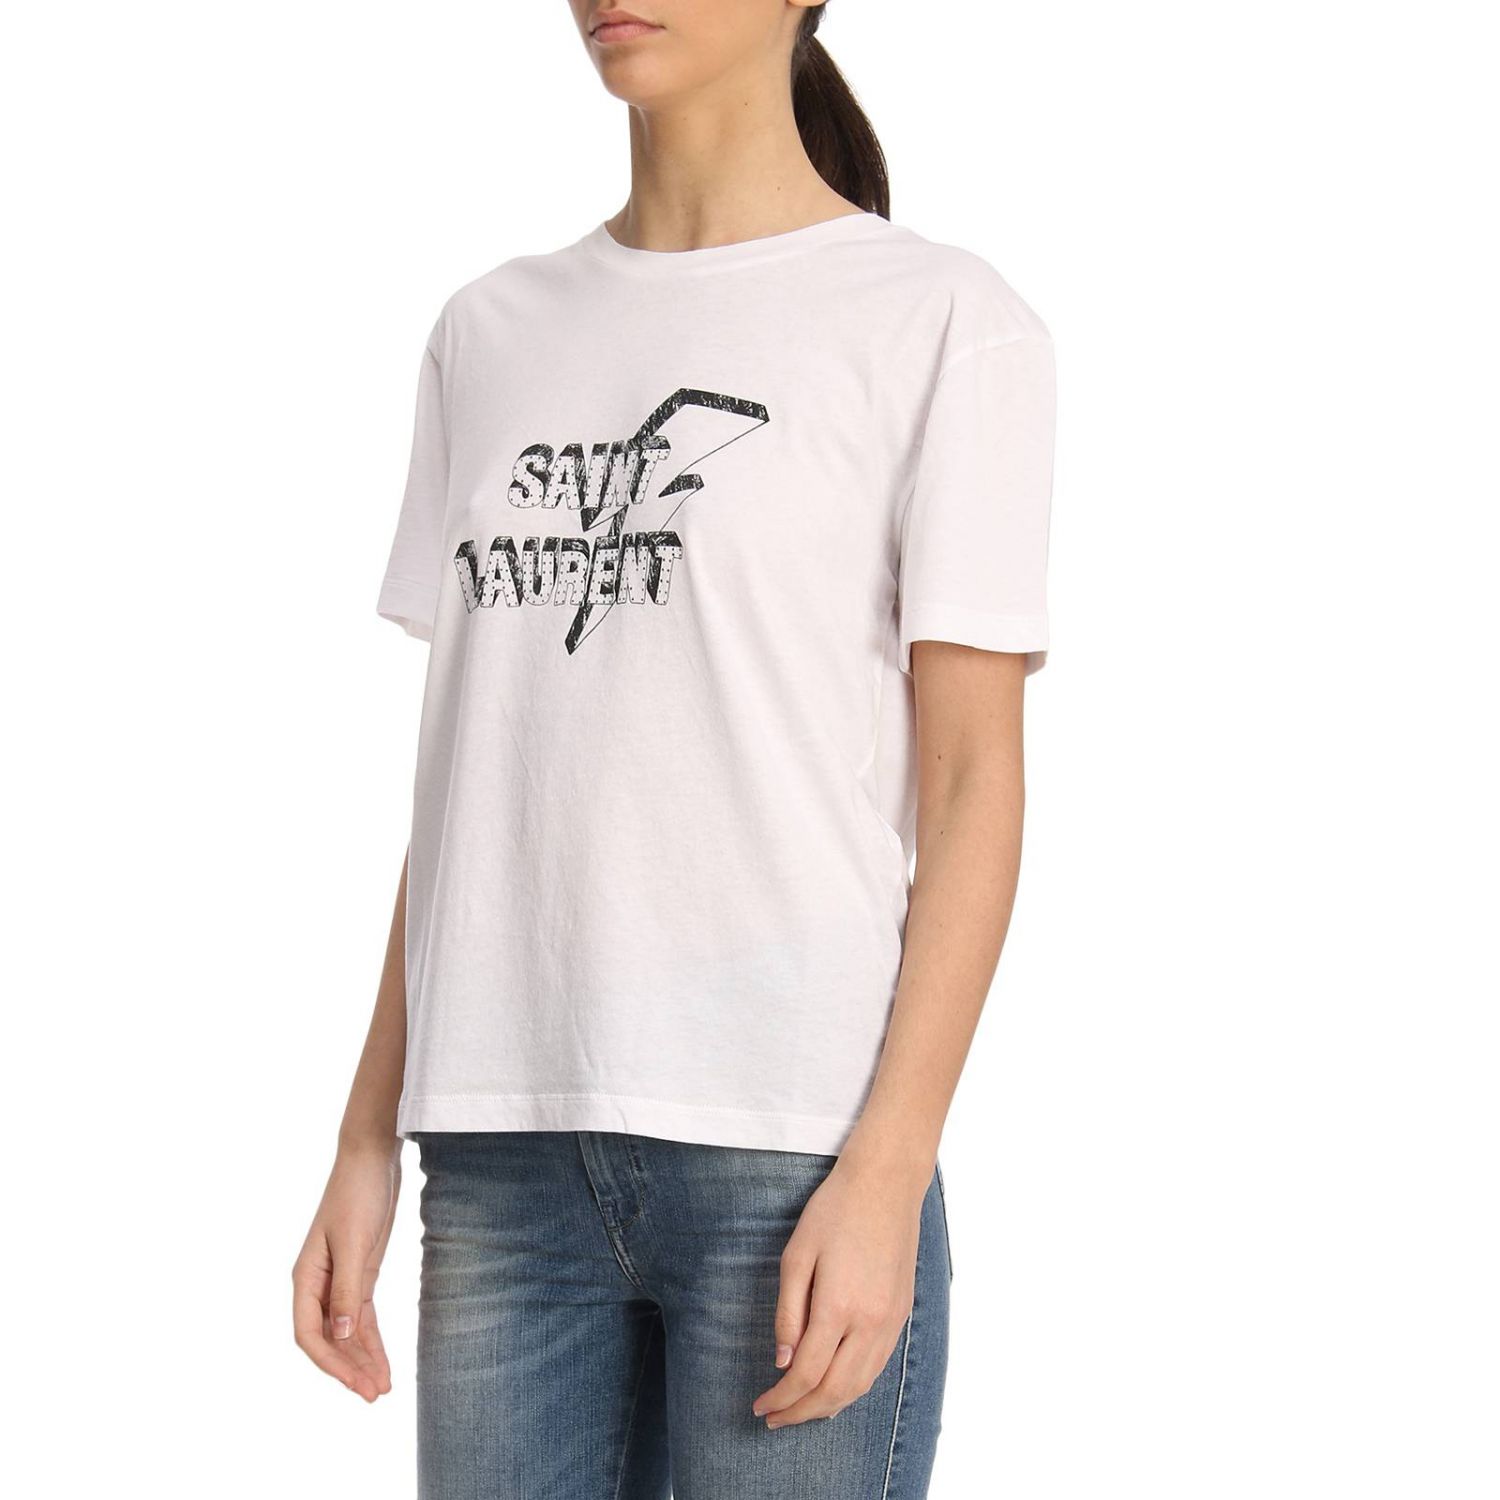 SAINT LAURENT: T-shirt women | T-Shirt Saint Laurent Women White | T